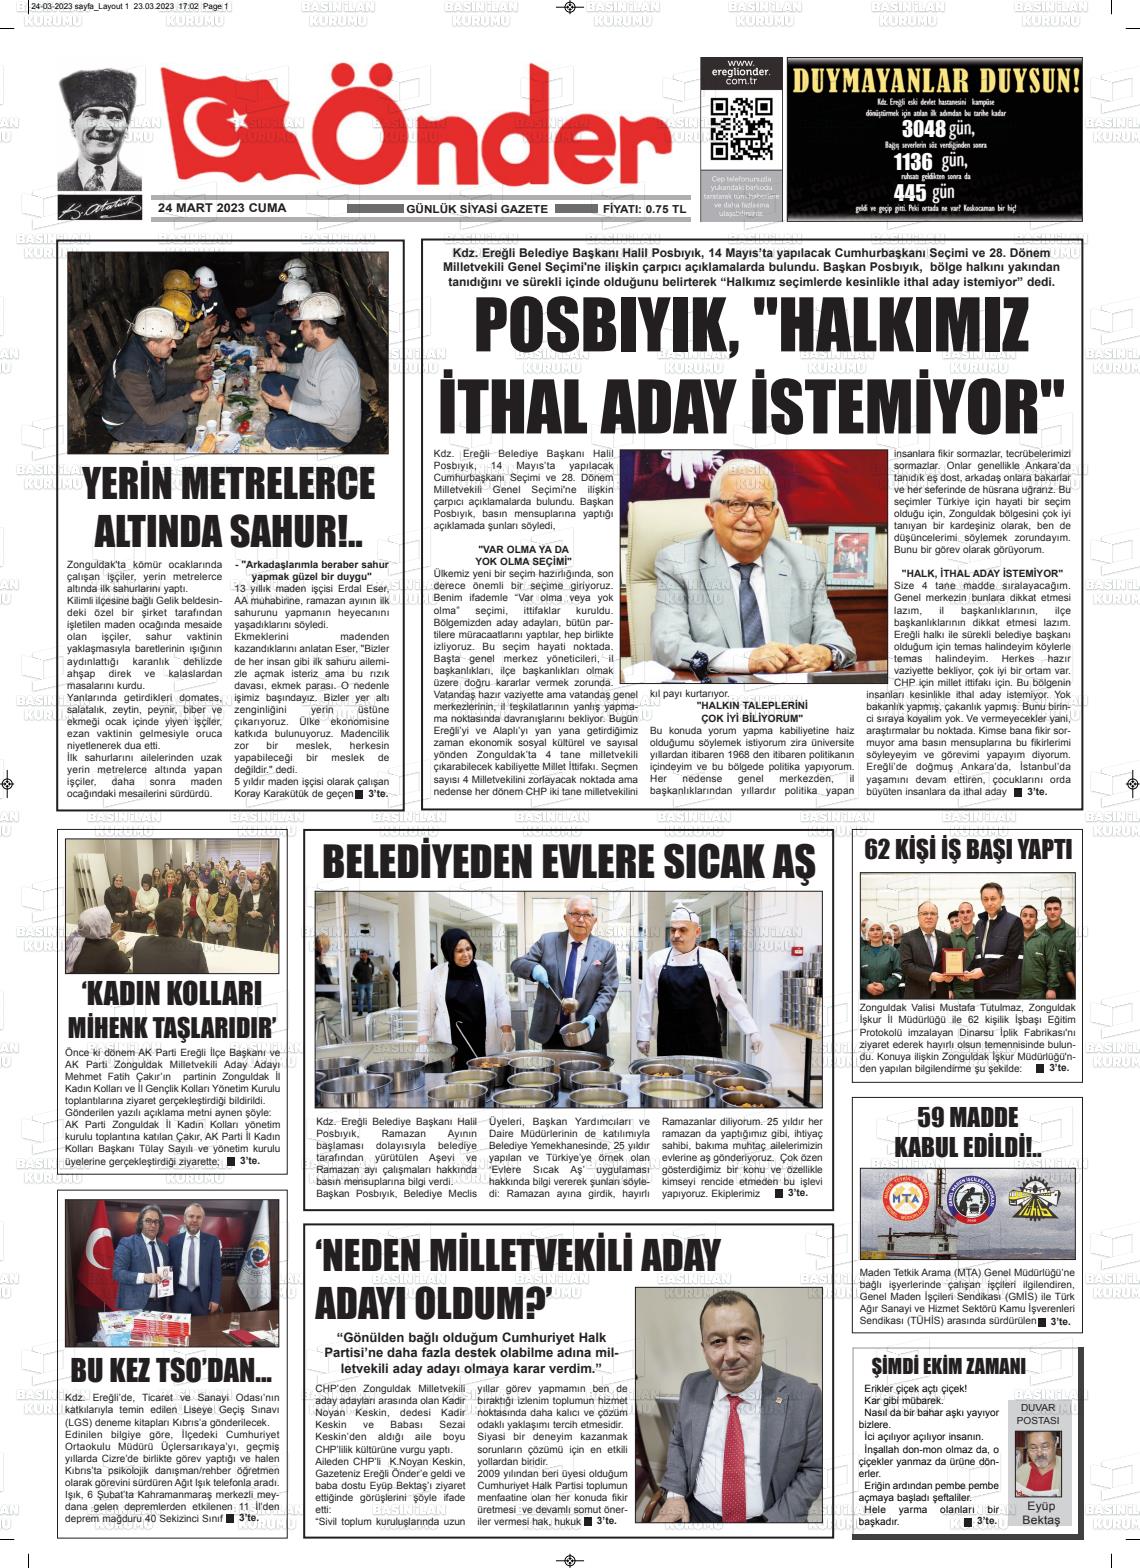 24 Mart 2023 Zonguldak Önder Gazete Manşeti